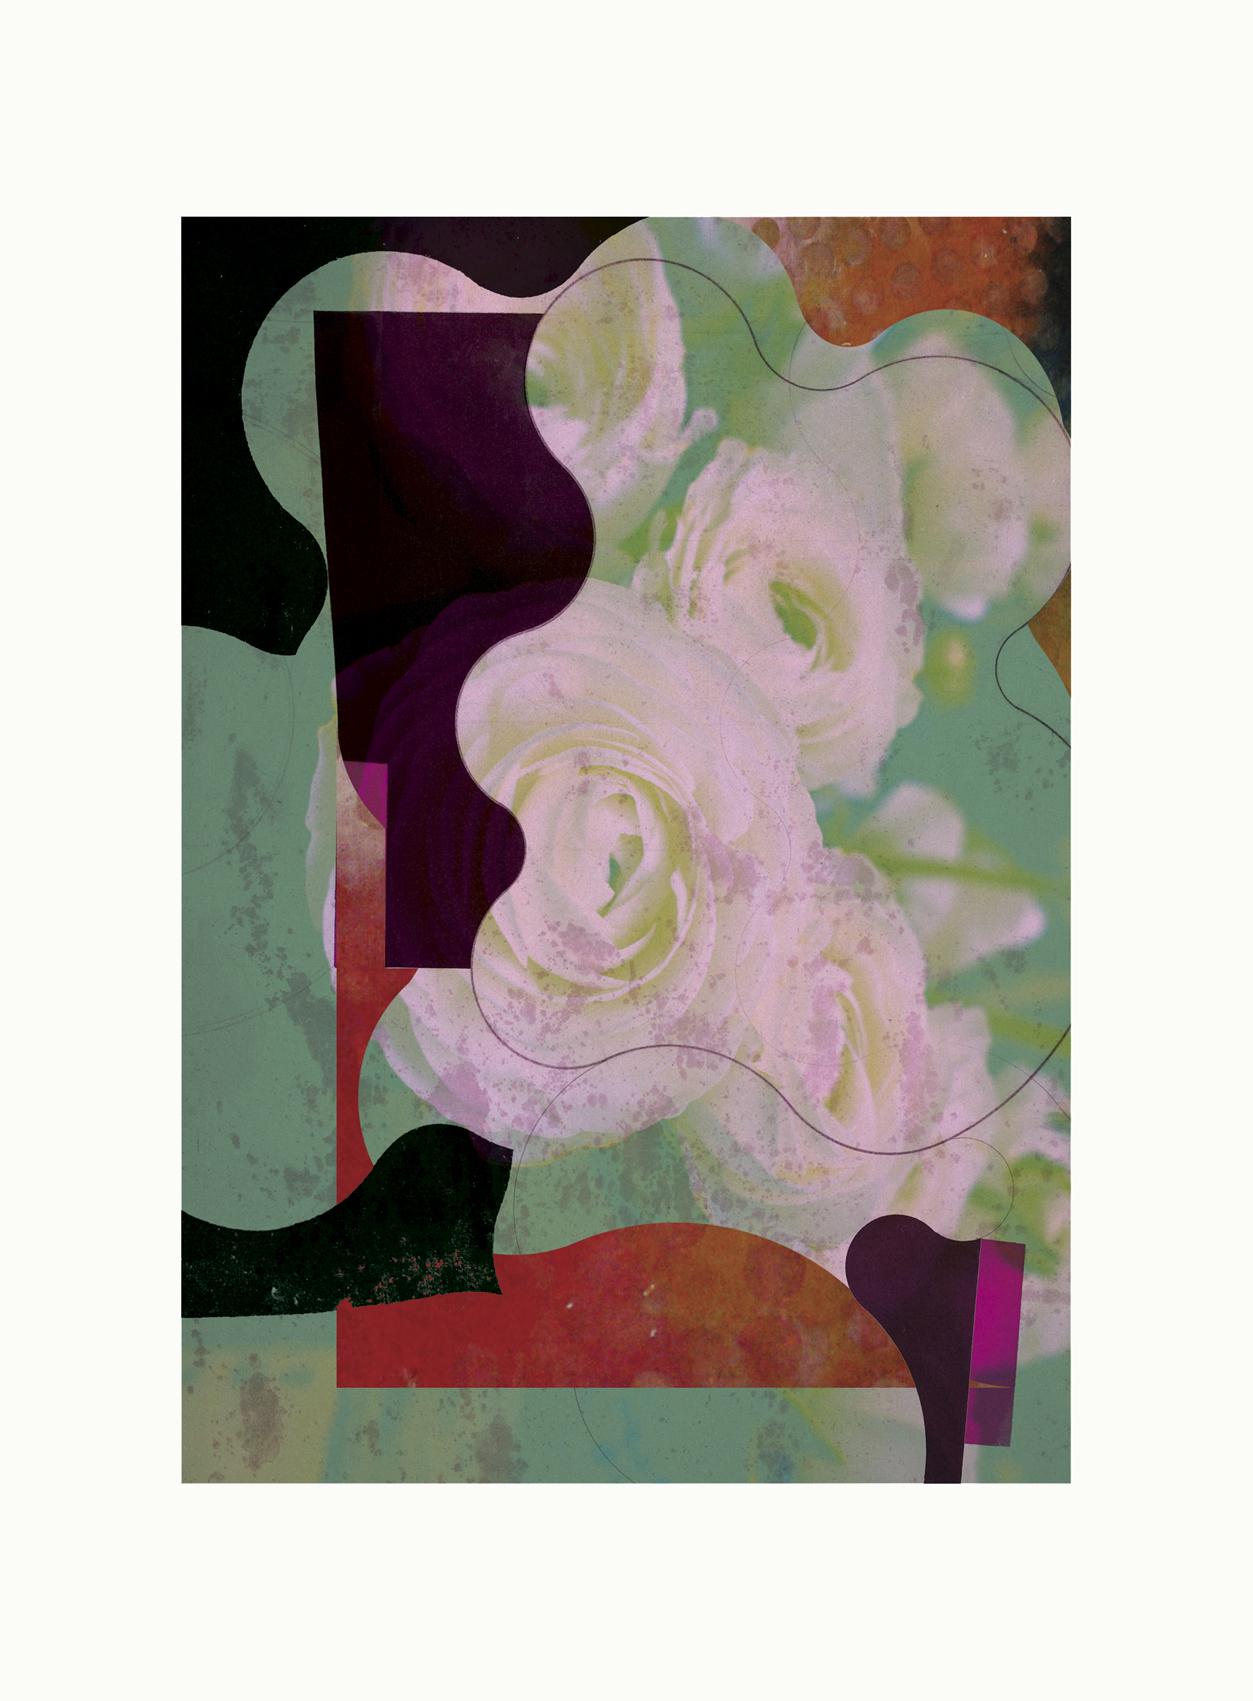 Francisco Nicolás Abstract Print – Blumen8-Zeitgenössisch, Abstrakt, Gestuell, Street Art, Pop Art, Moderne, Geometrisch